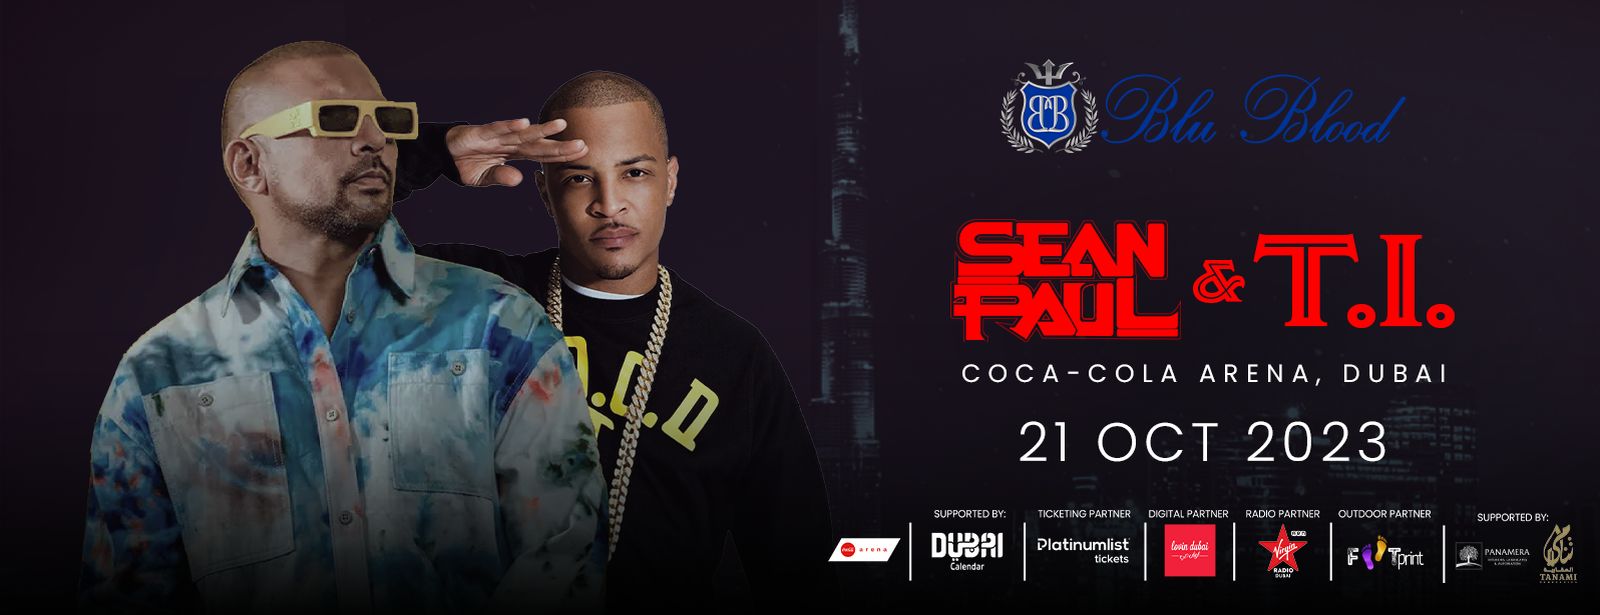 Sean Paul & T.I. Live at Coca-Cola Arena, Dubai (POSTPONED) - Coming Soon in UAE